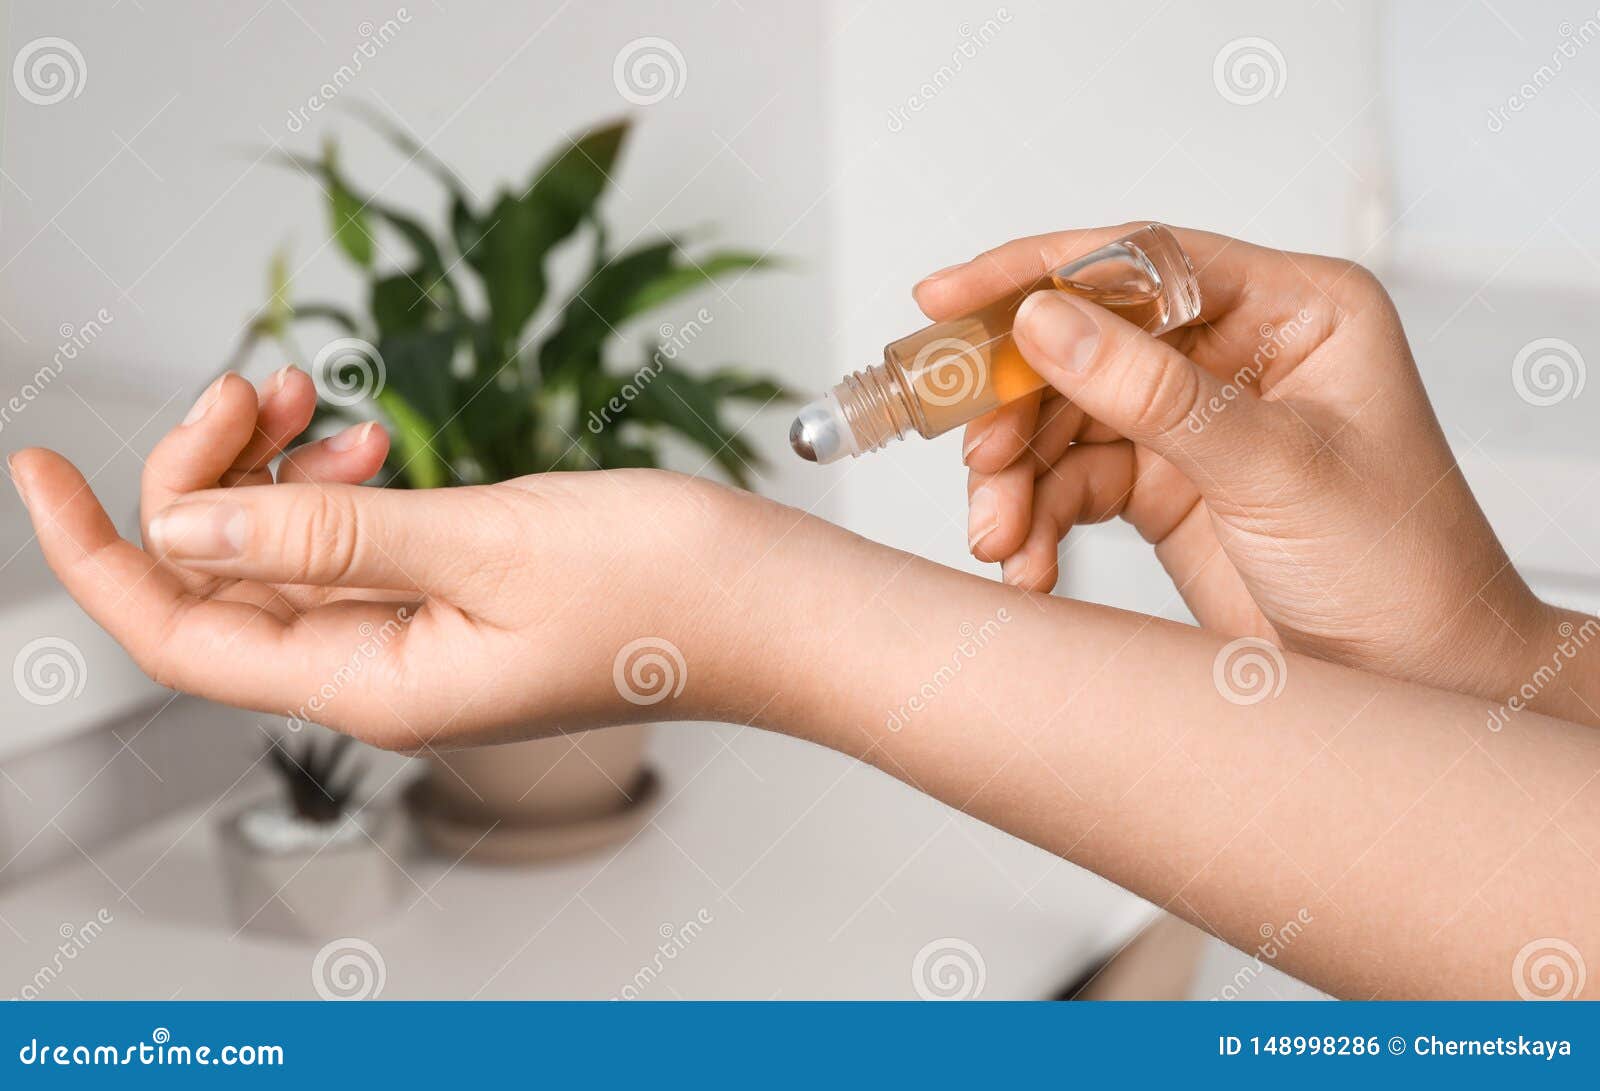 woman applying essential oil on wrist indoors